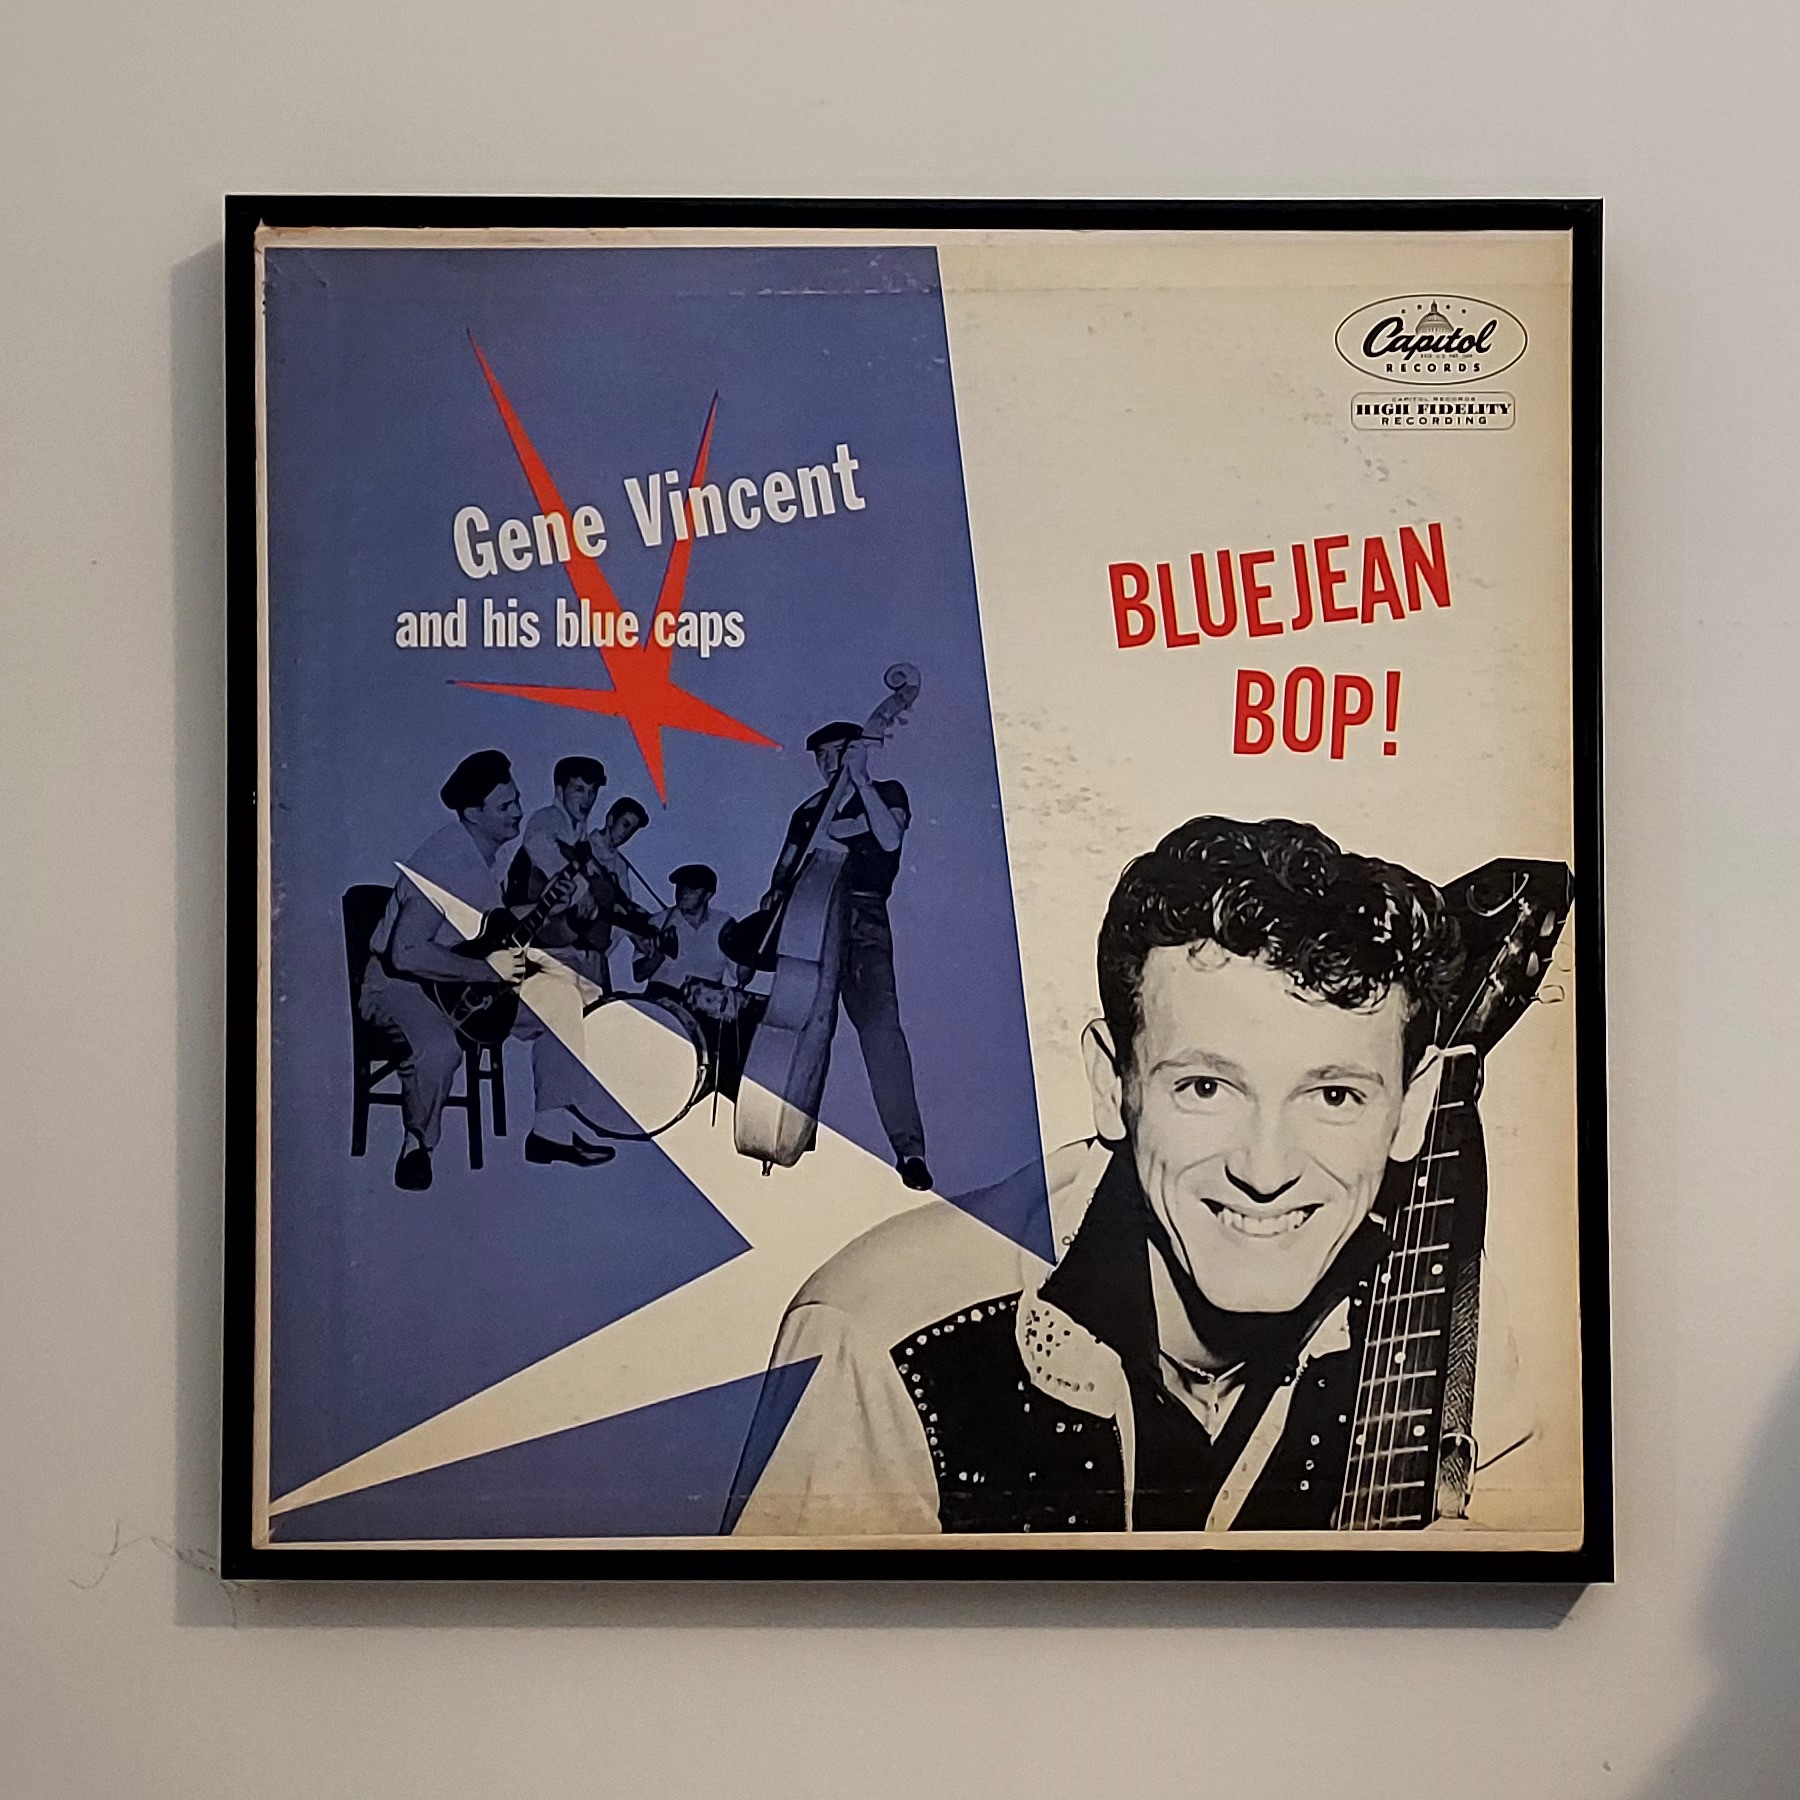 Gene Vincent's Original first album from 1956.